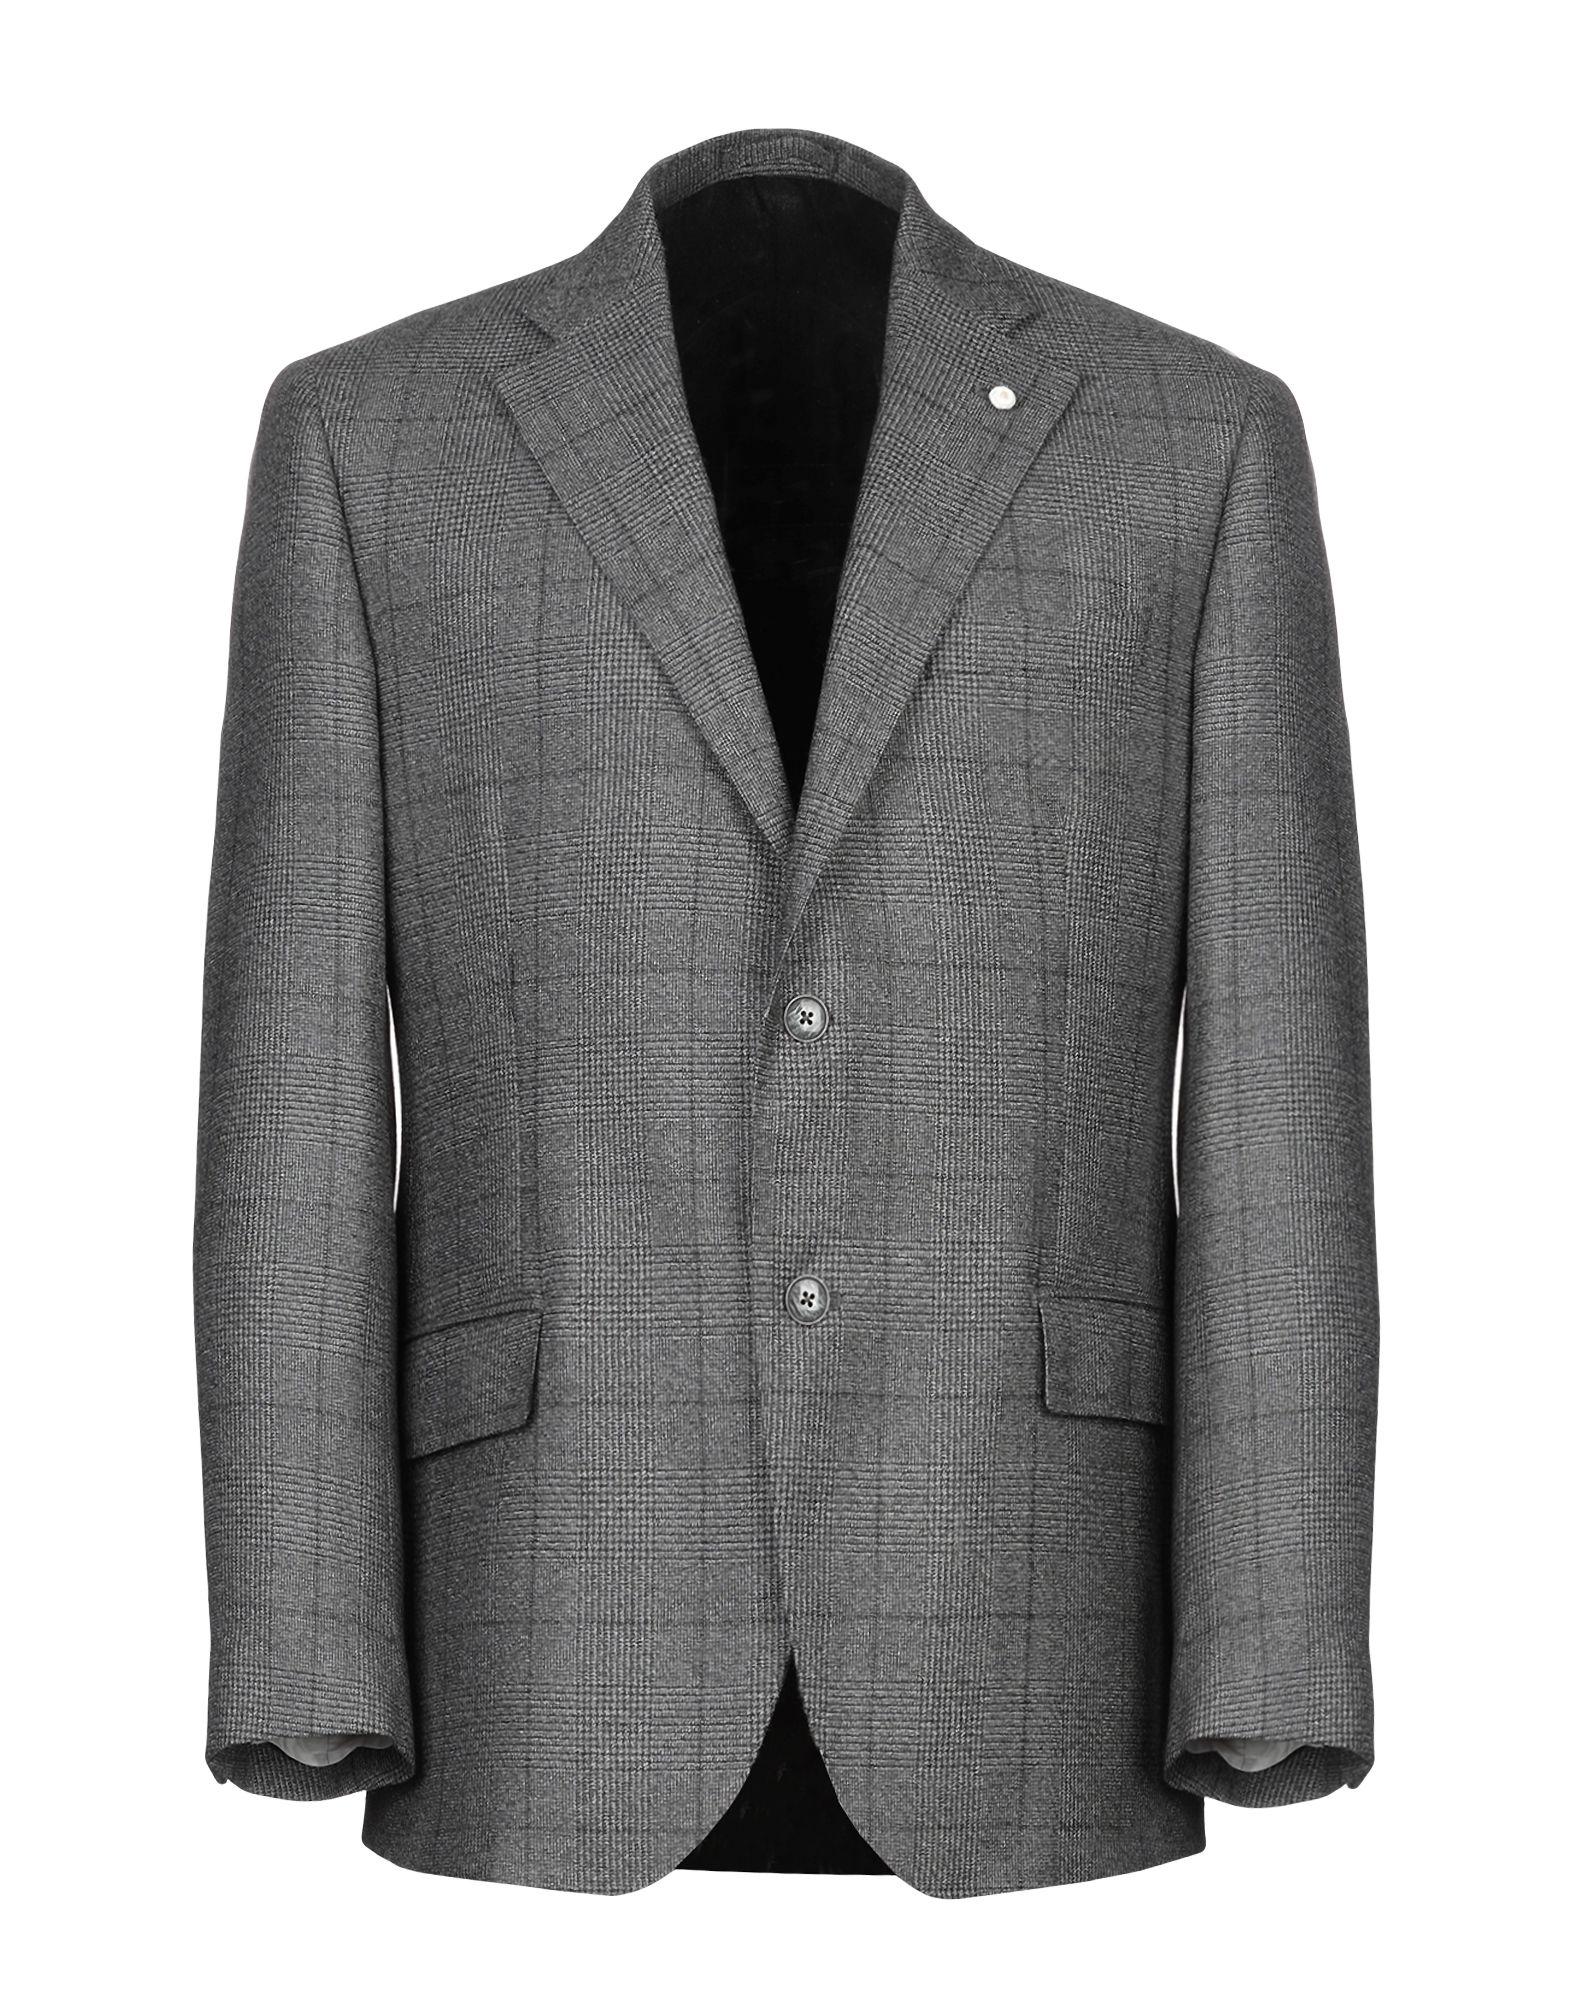 Luigi Bianchi Mantova Wool Blazer in Grey (Gray) for Men - Lyst